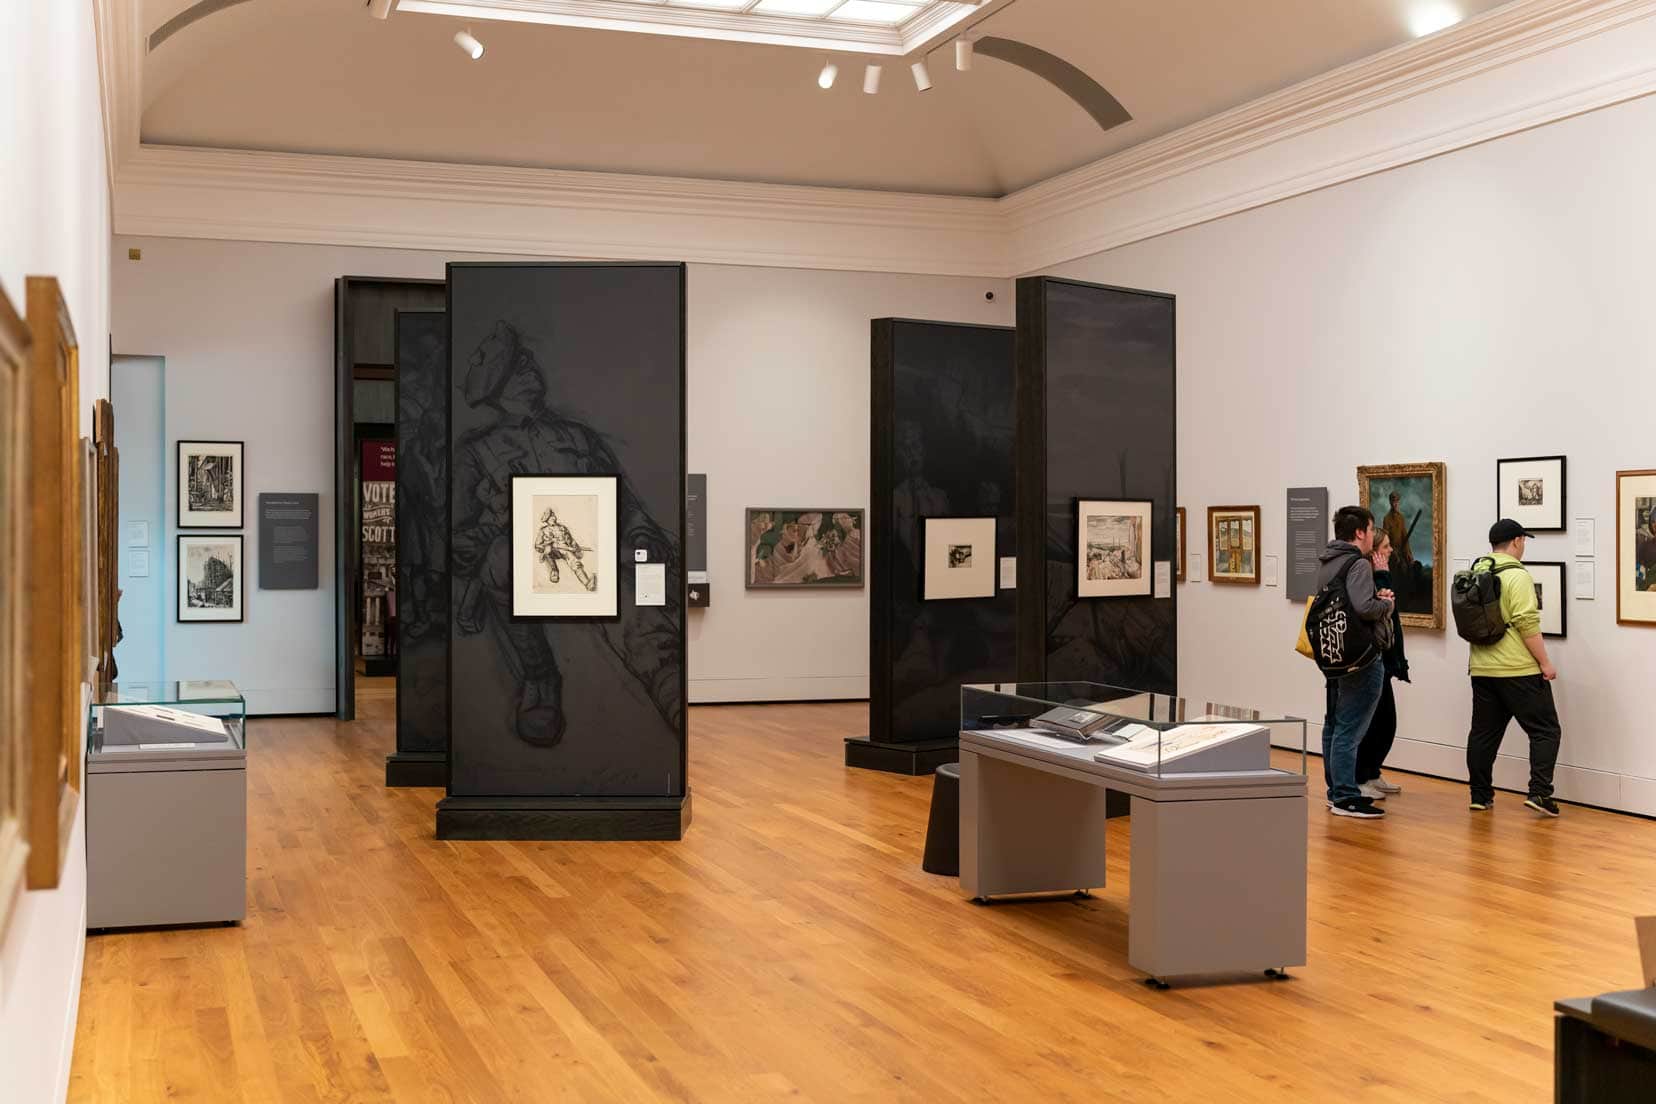 Aberdeen art gallery  exhibits